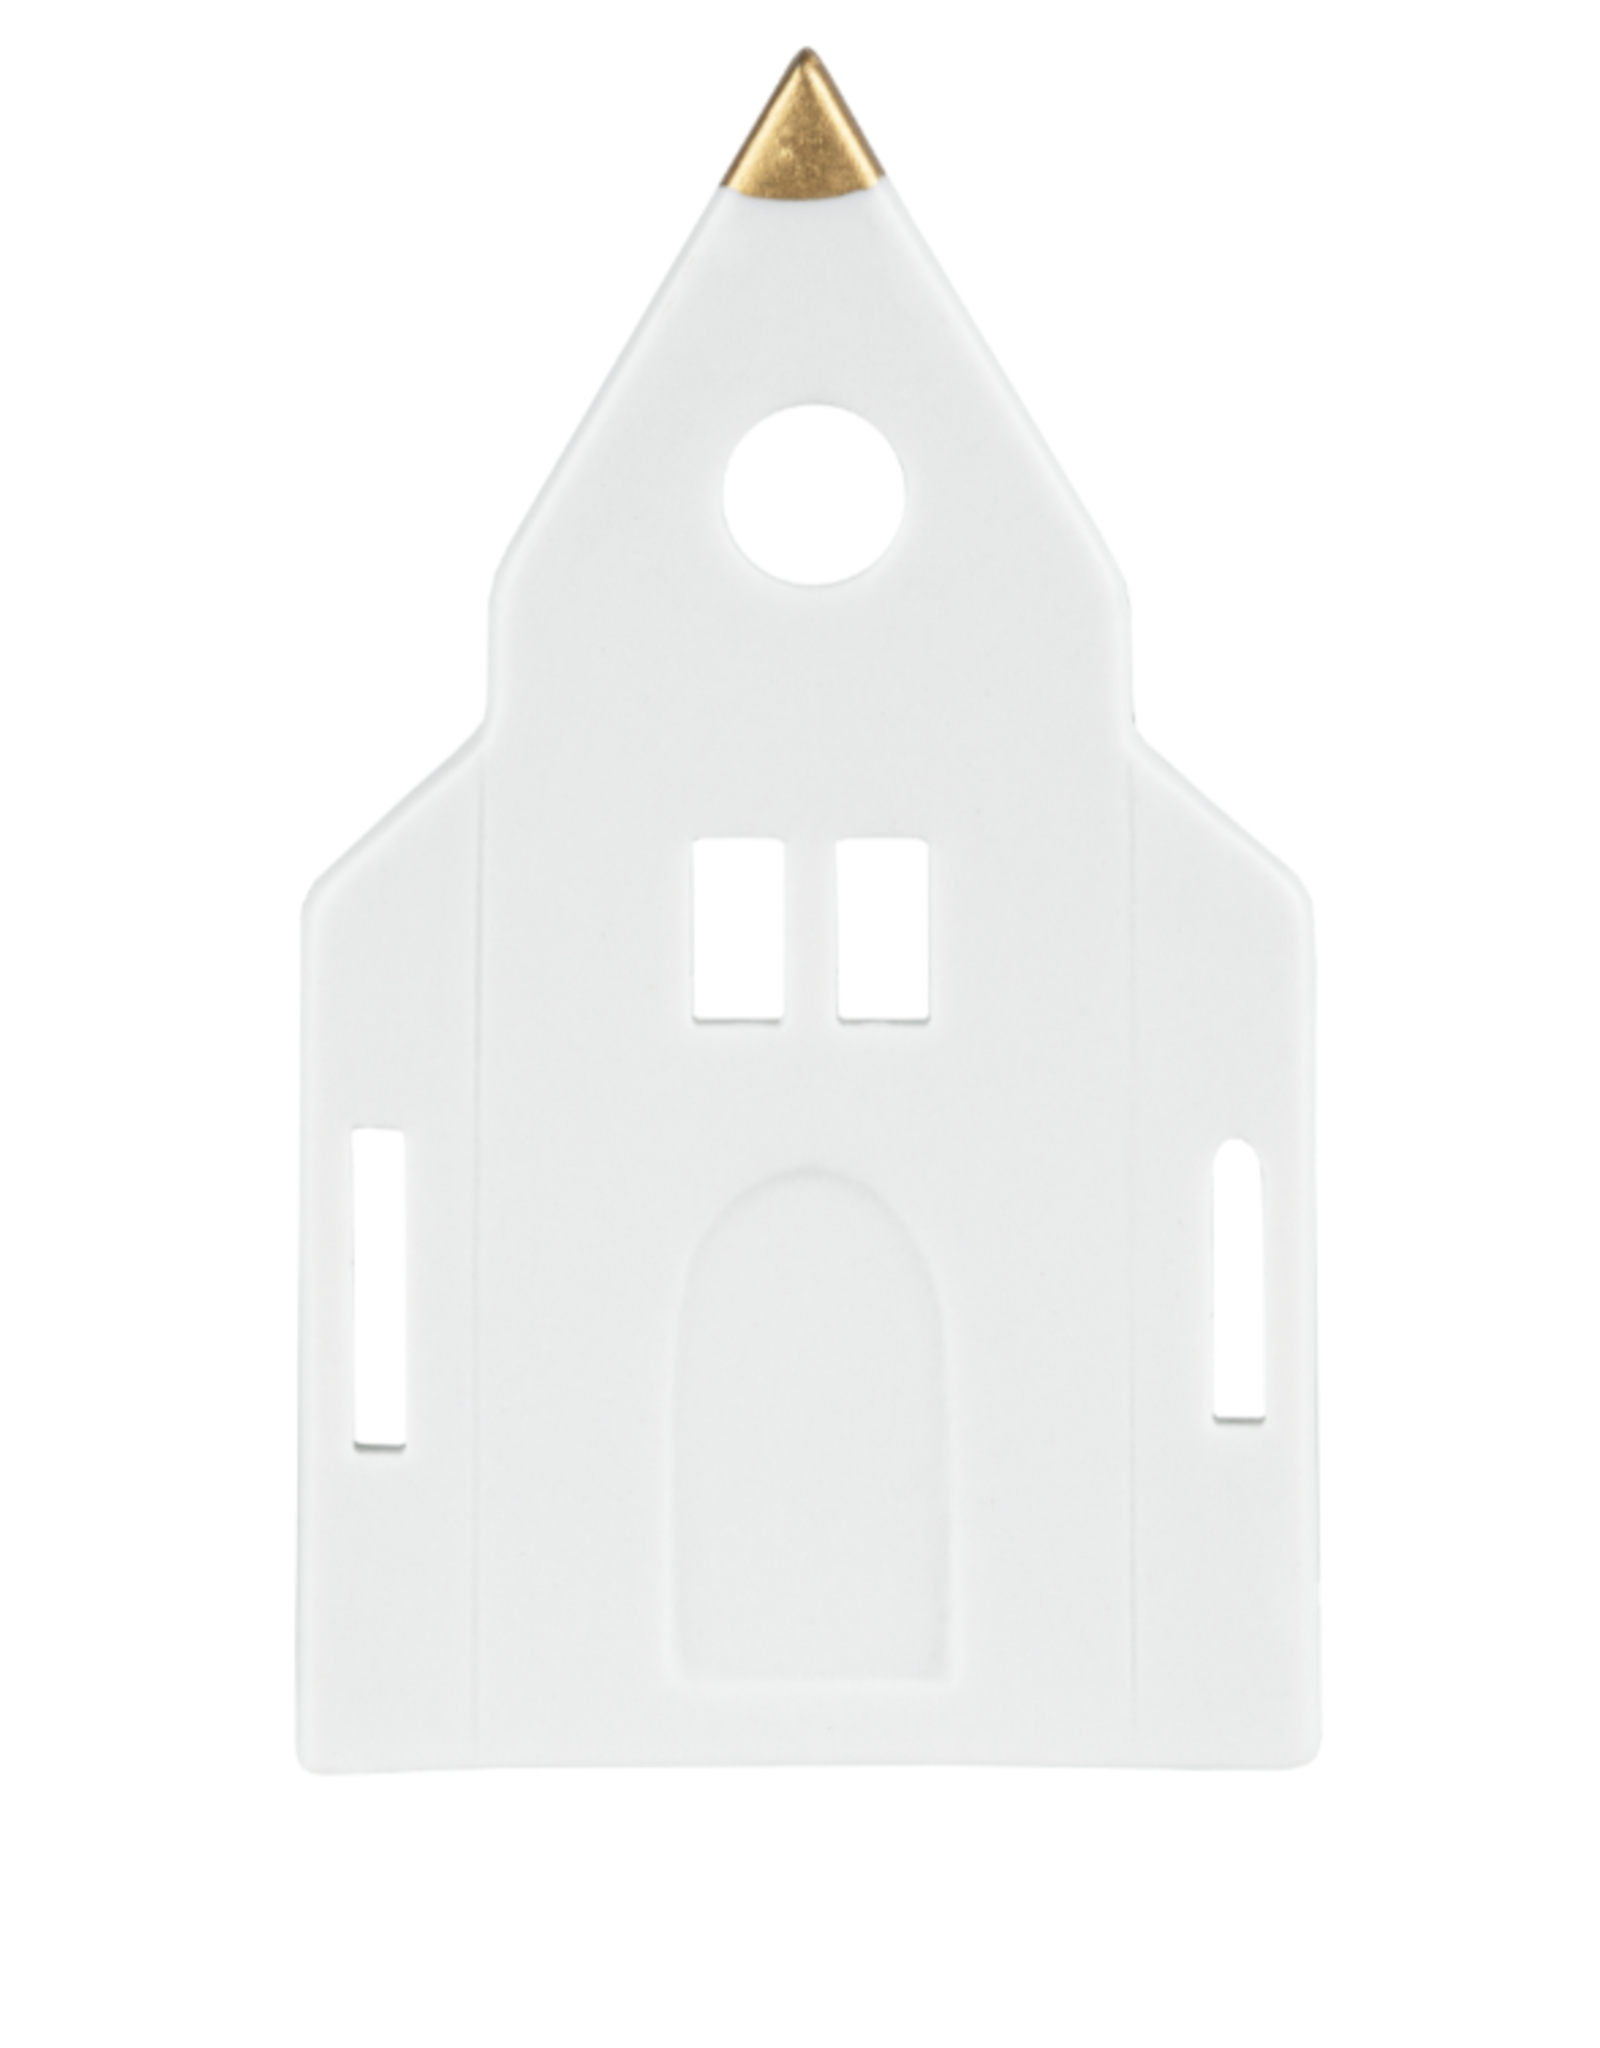 Räder Rader - Little light house - Church